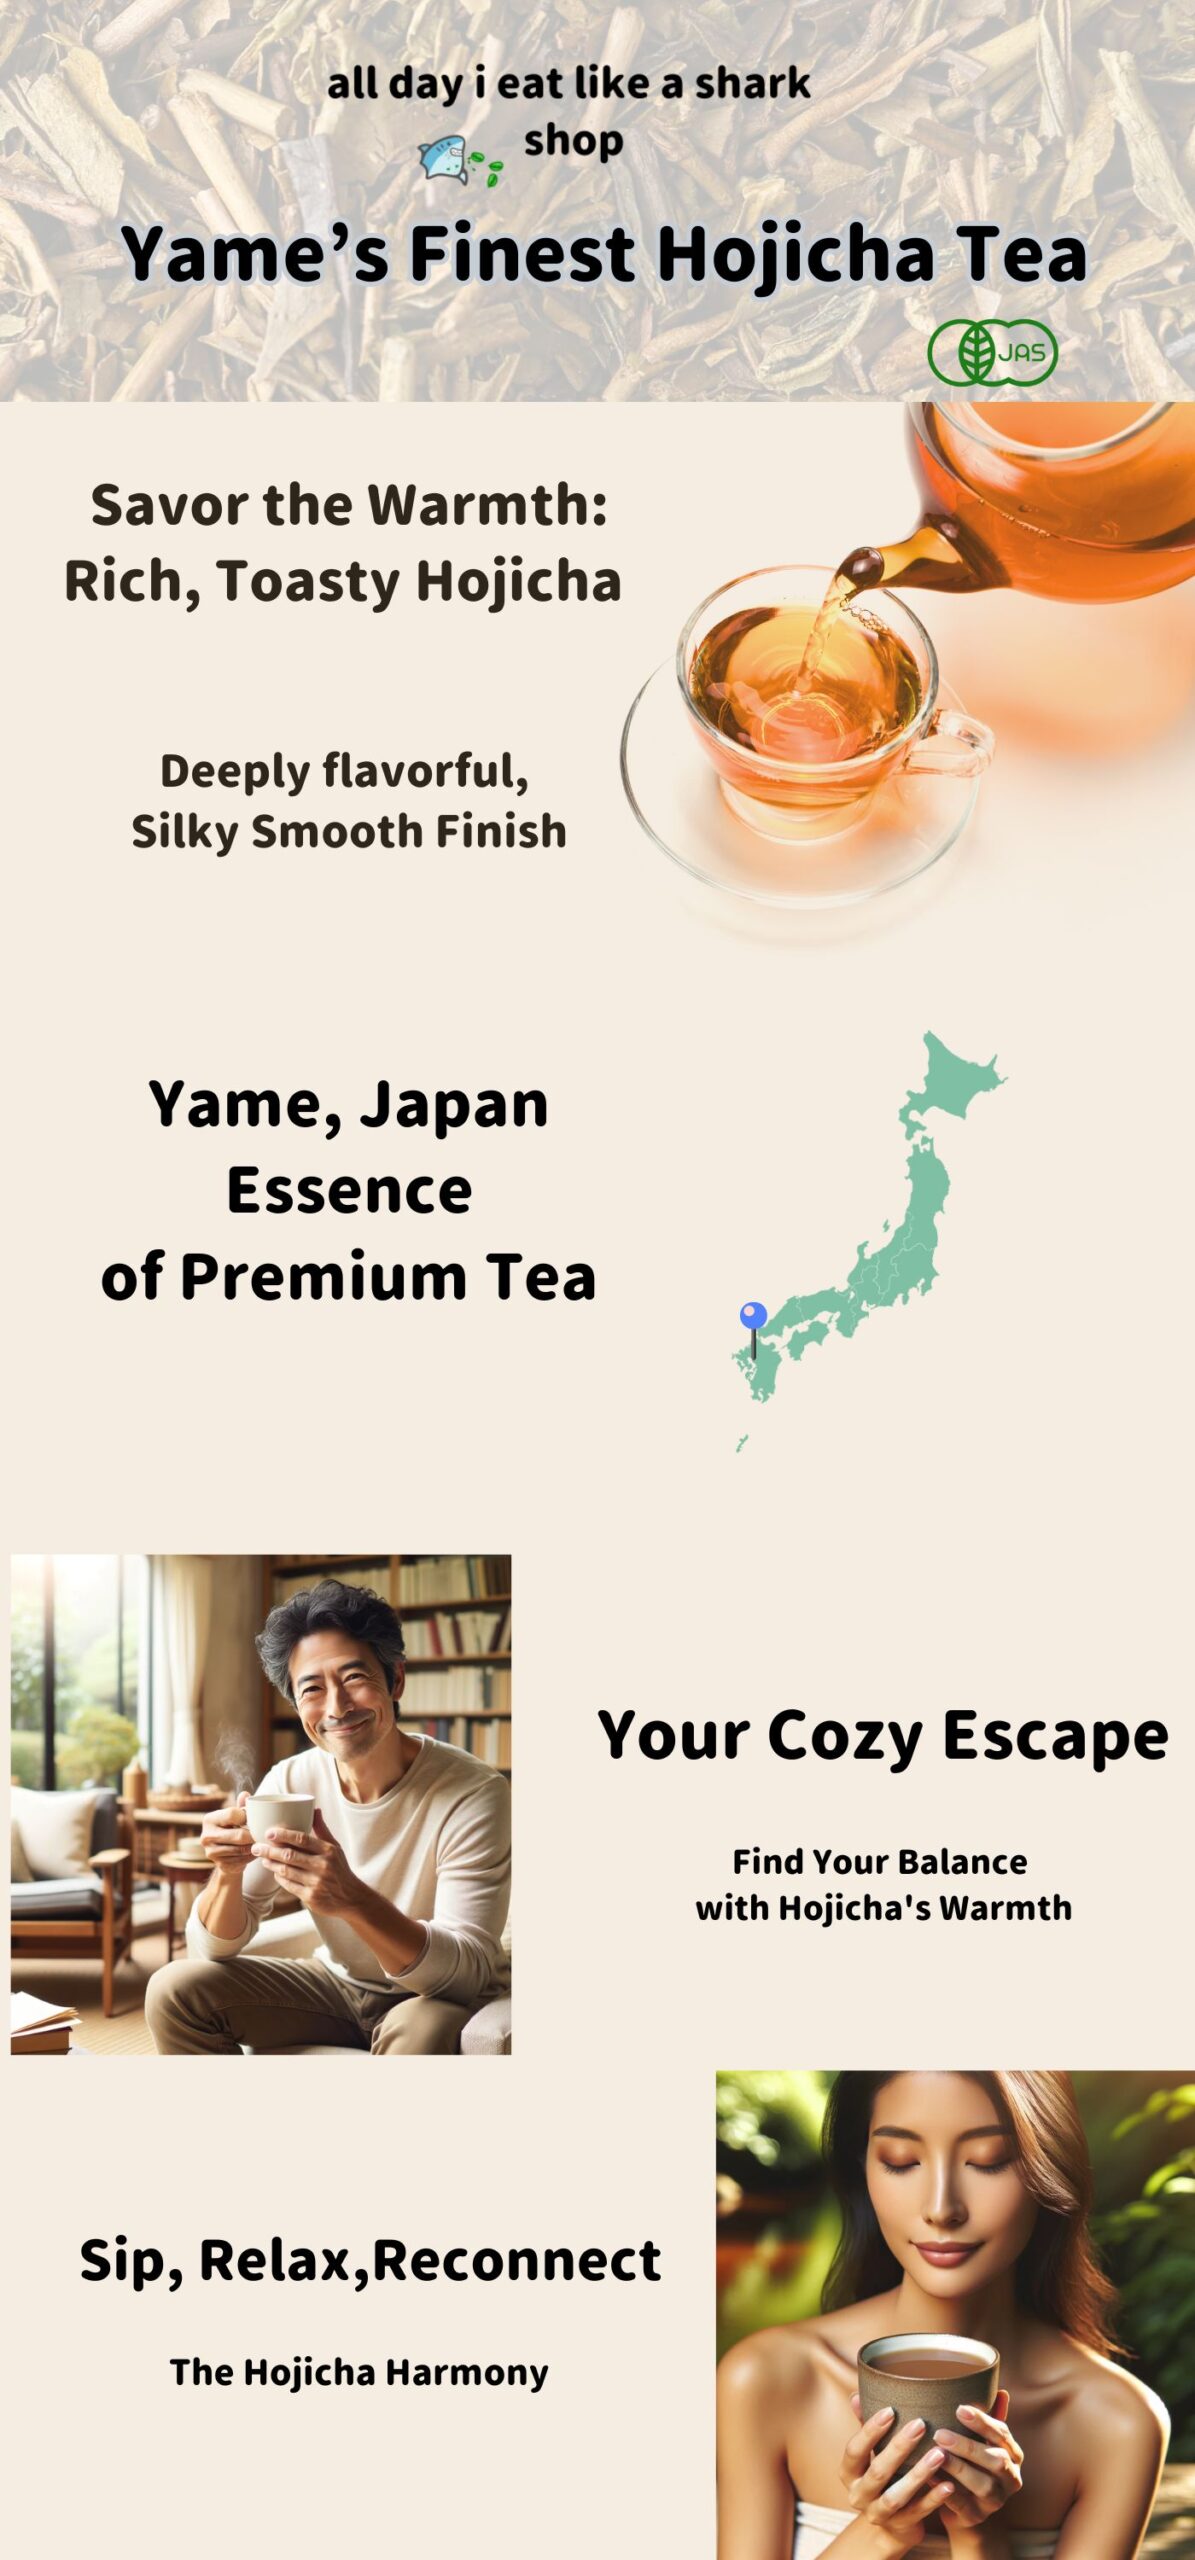 Yame’s Finest Hojicha Tea infographic